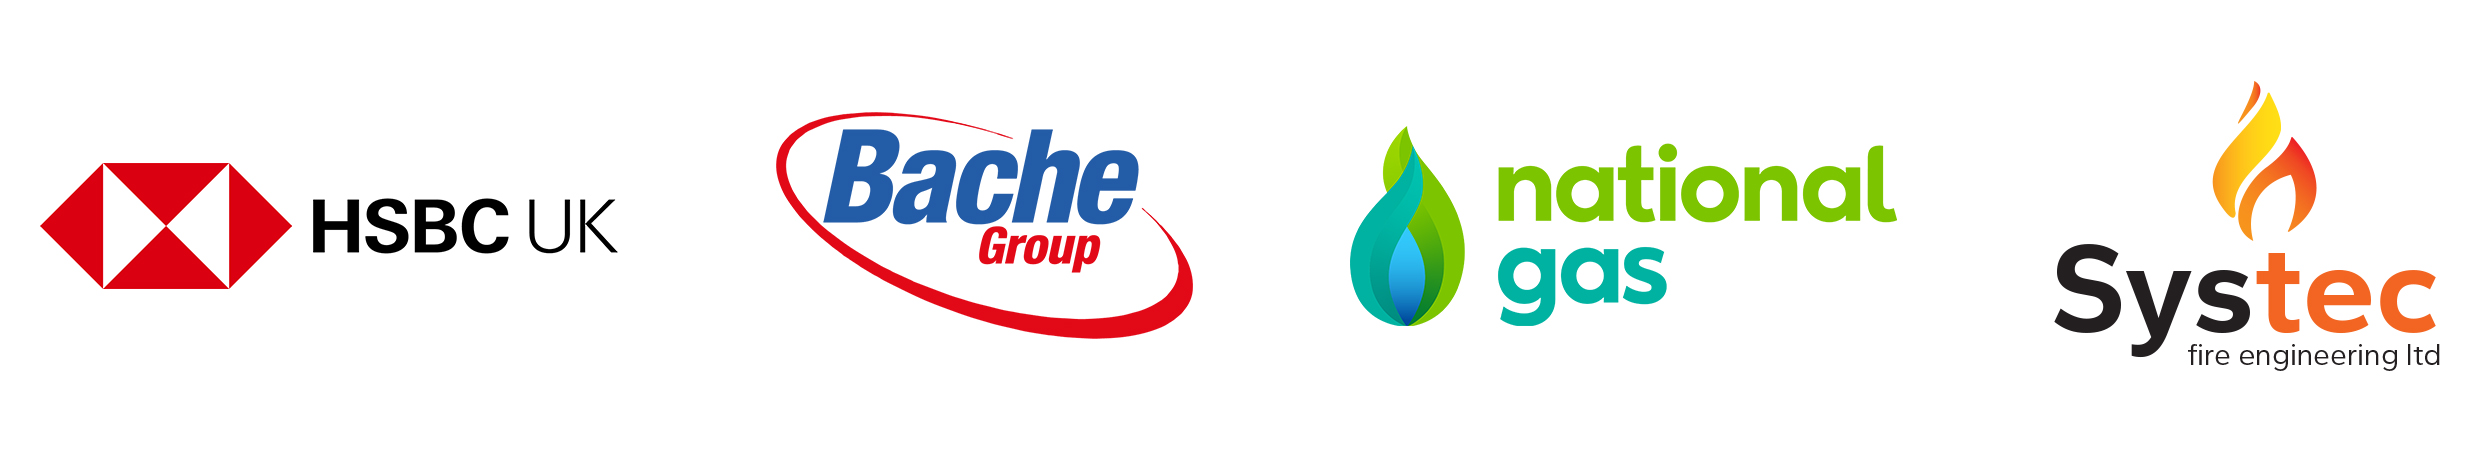 Blind Walk Sponsor Logos: HSBC UK, Bache Group, National Gas & Systec Fire Engineering.